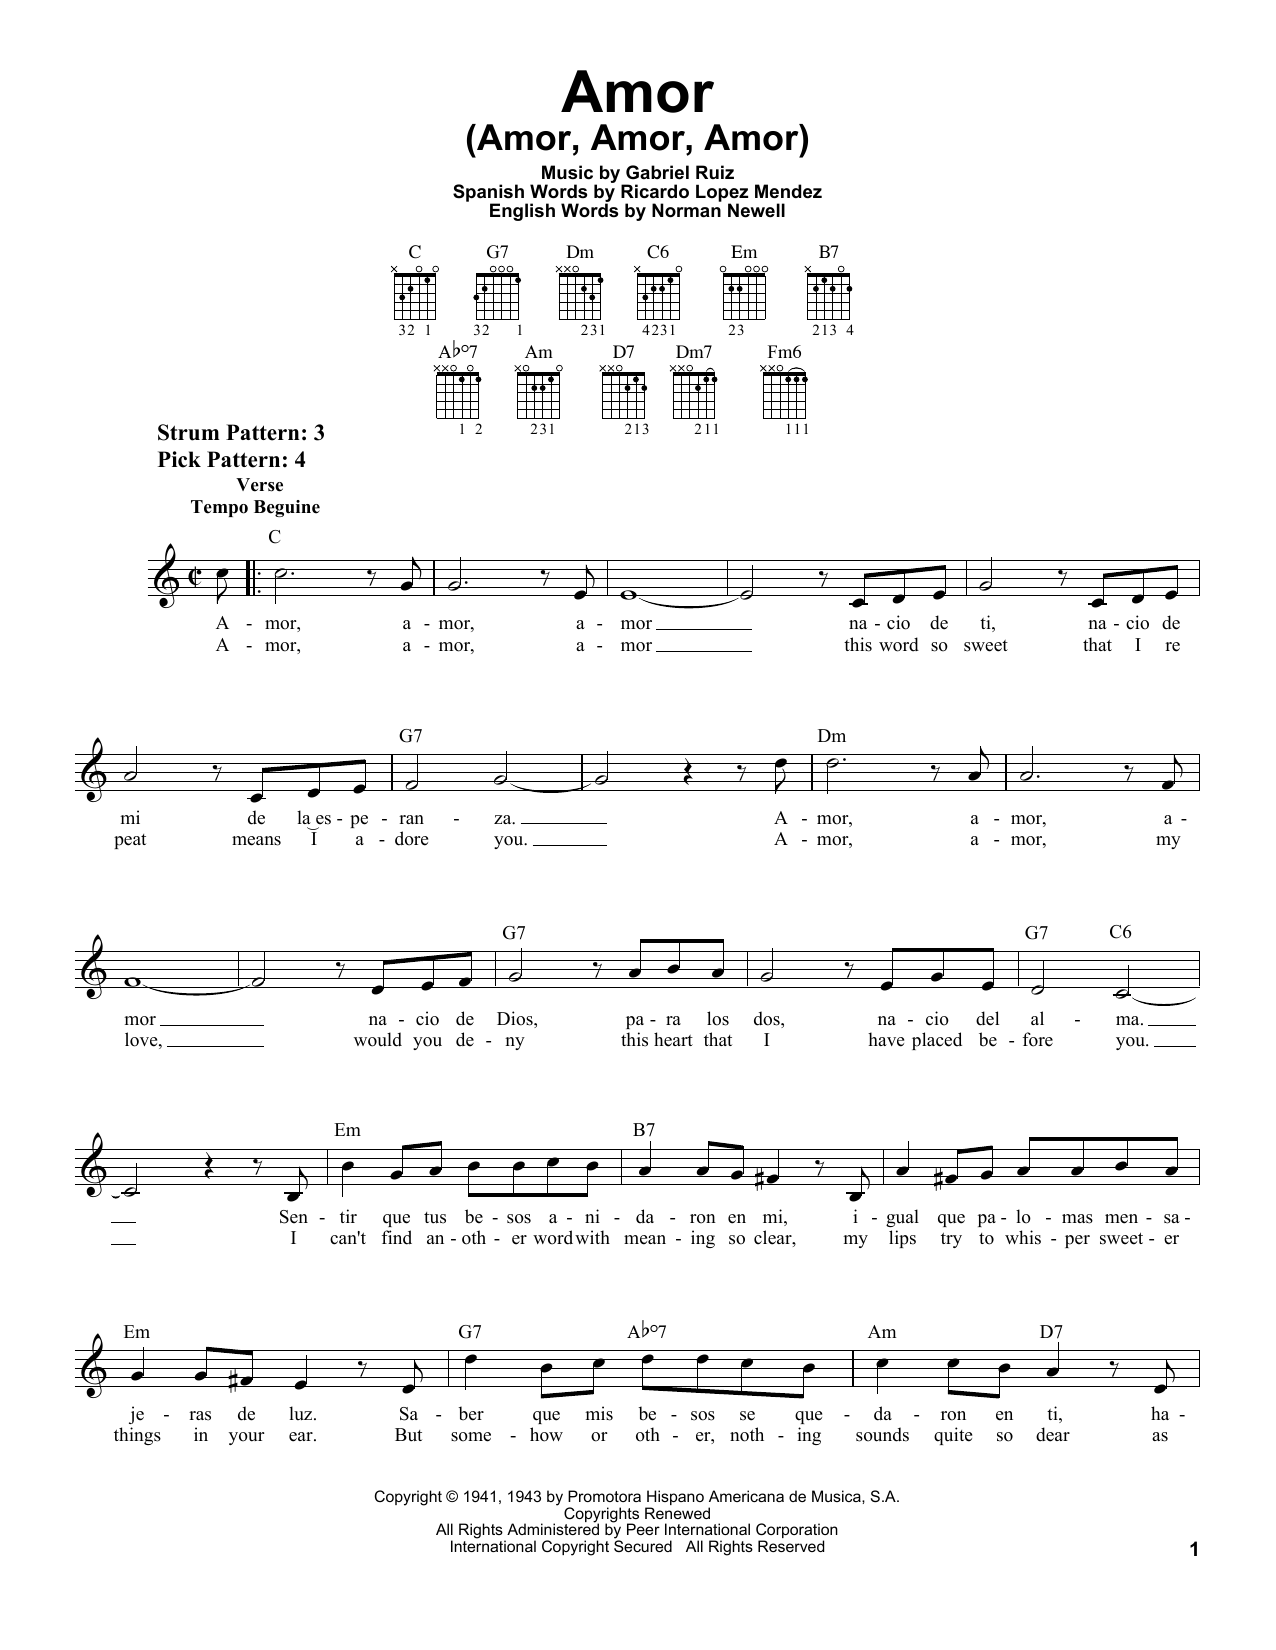 Gabriel Ruiz Amor (Amor, Amor, Amor) Sheet Music Notes & Chords for Easy Piano - Download or Print PDF